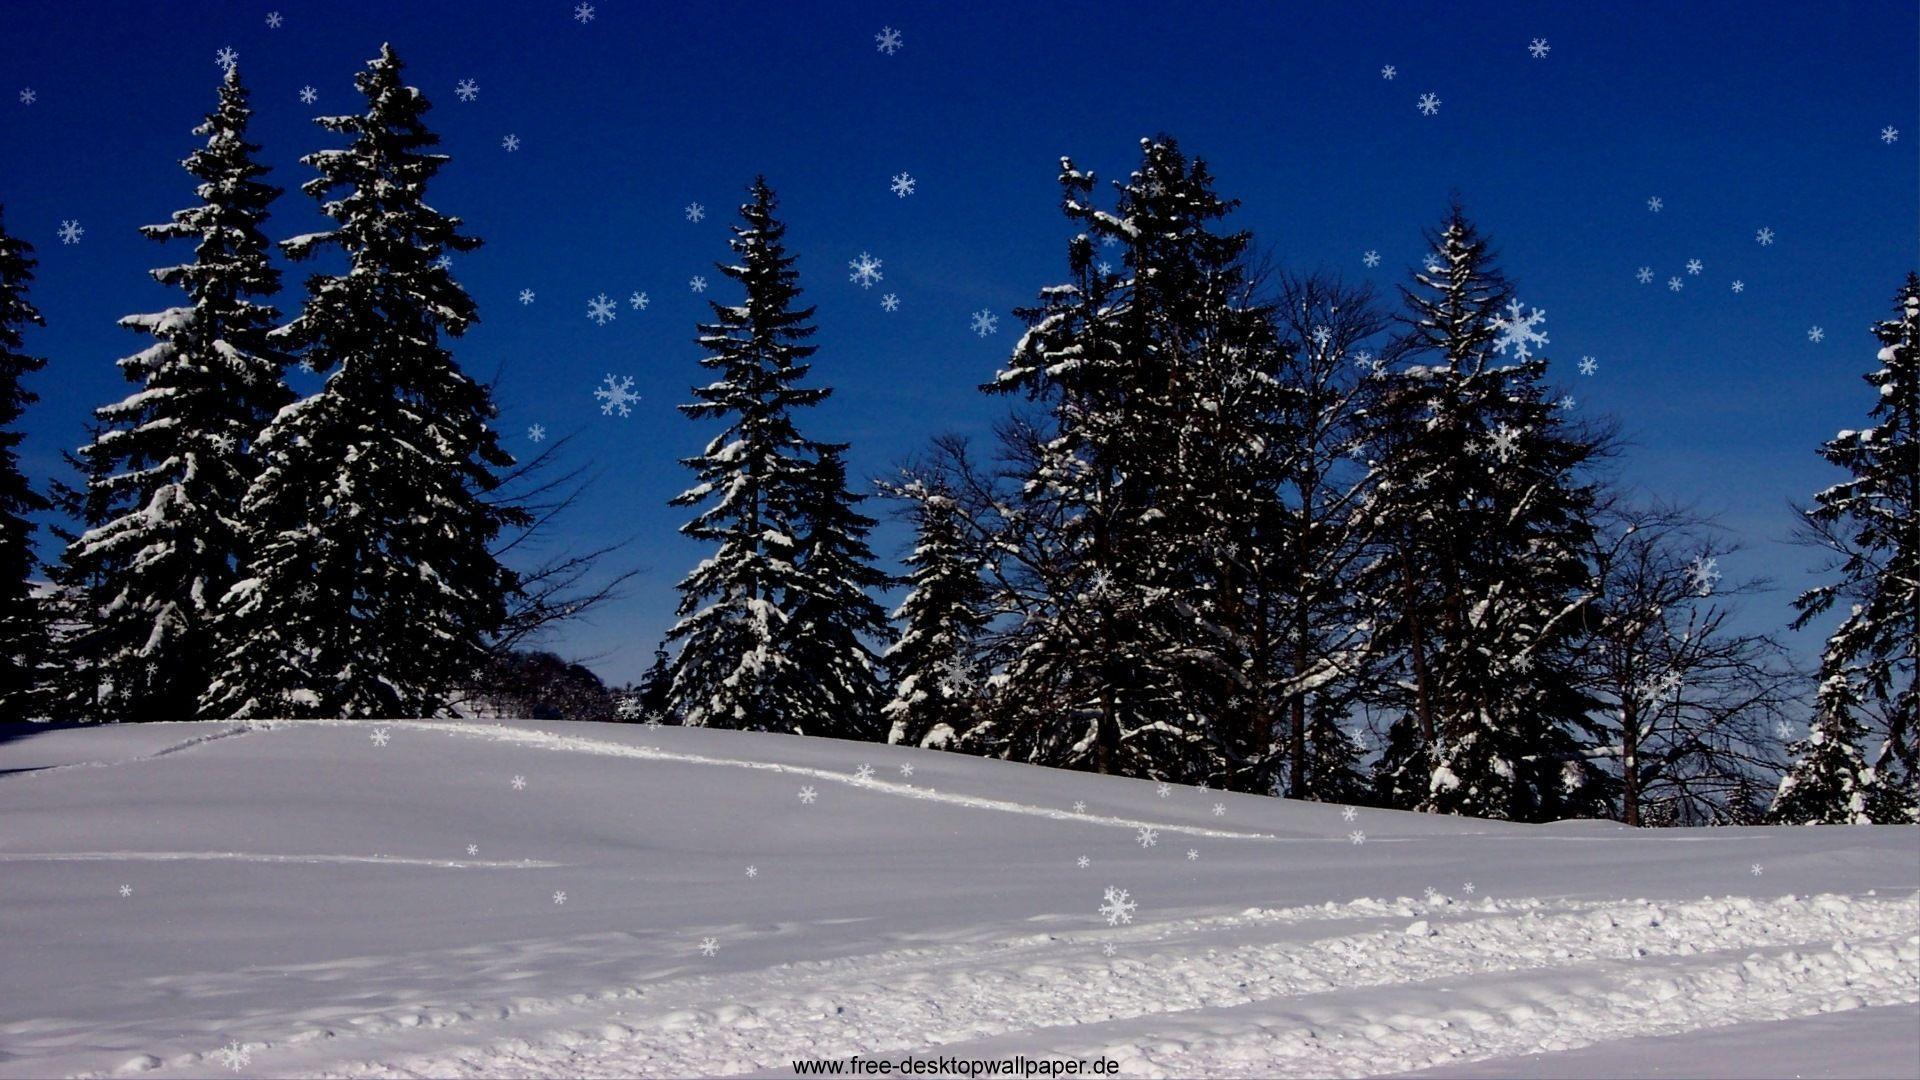 Download Wallpaper Nature Desktop Animated Snow Christmas